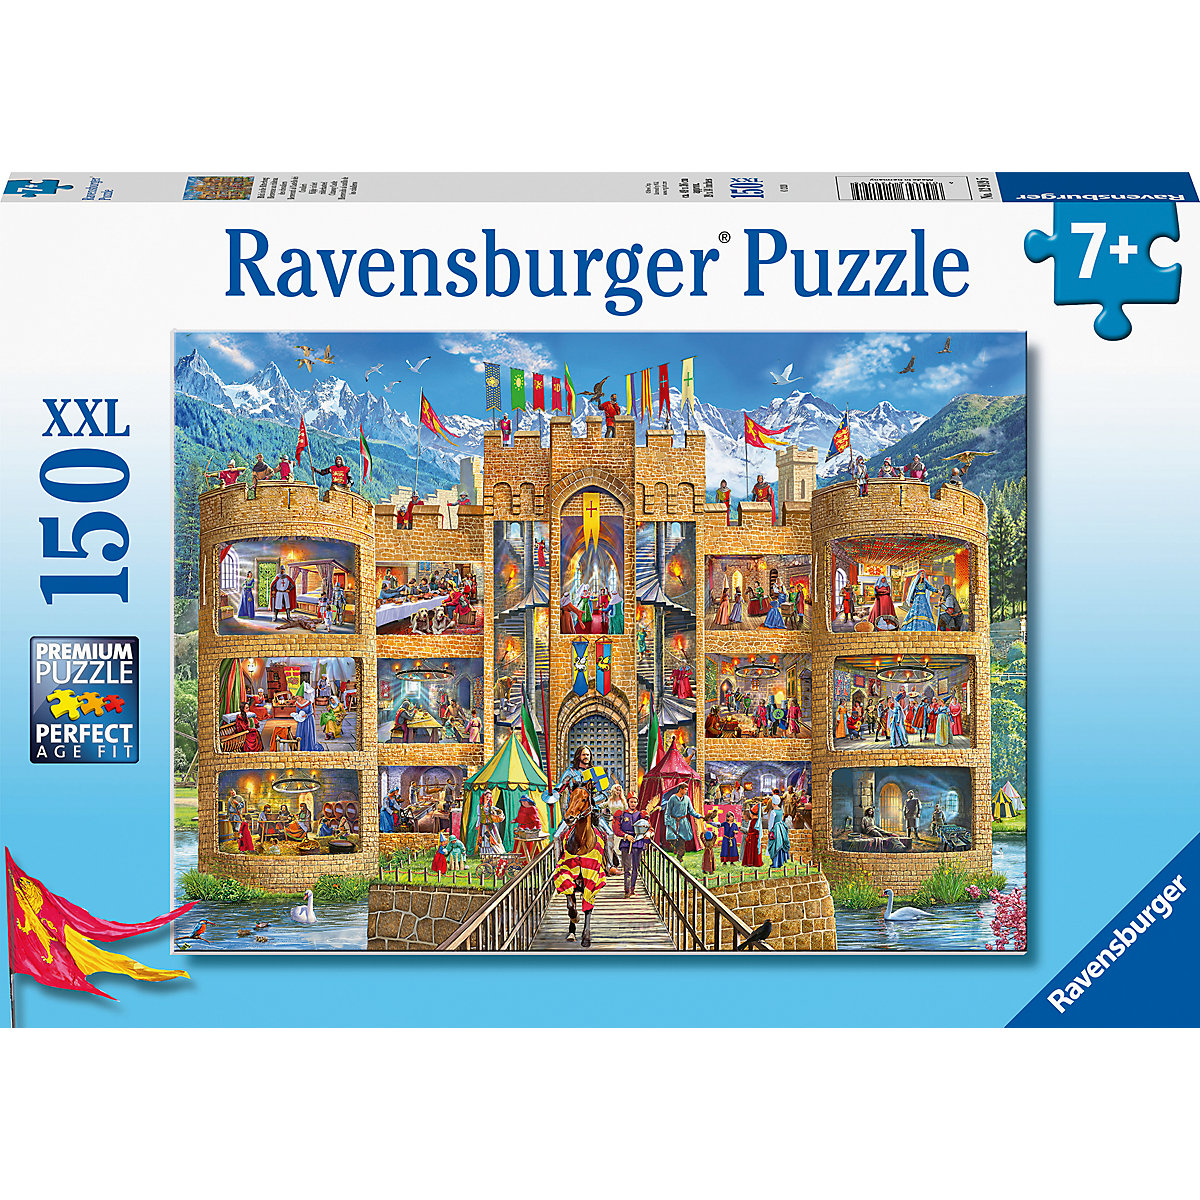 Ravensburger Puzzle Blick in die Ritterburg 150 Teile